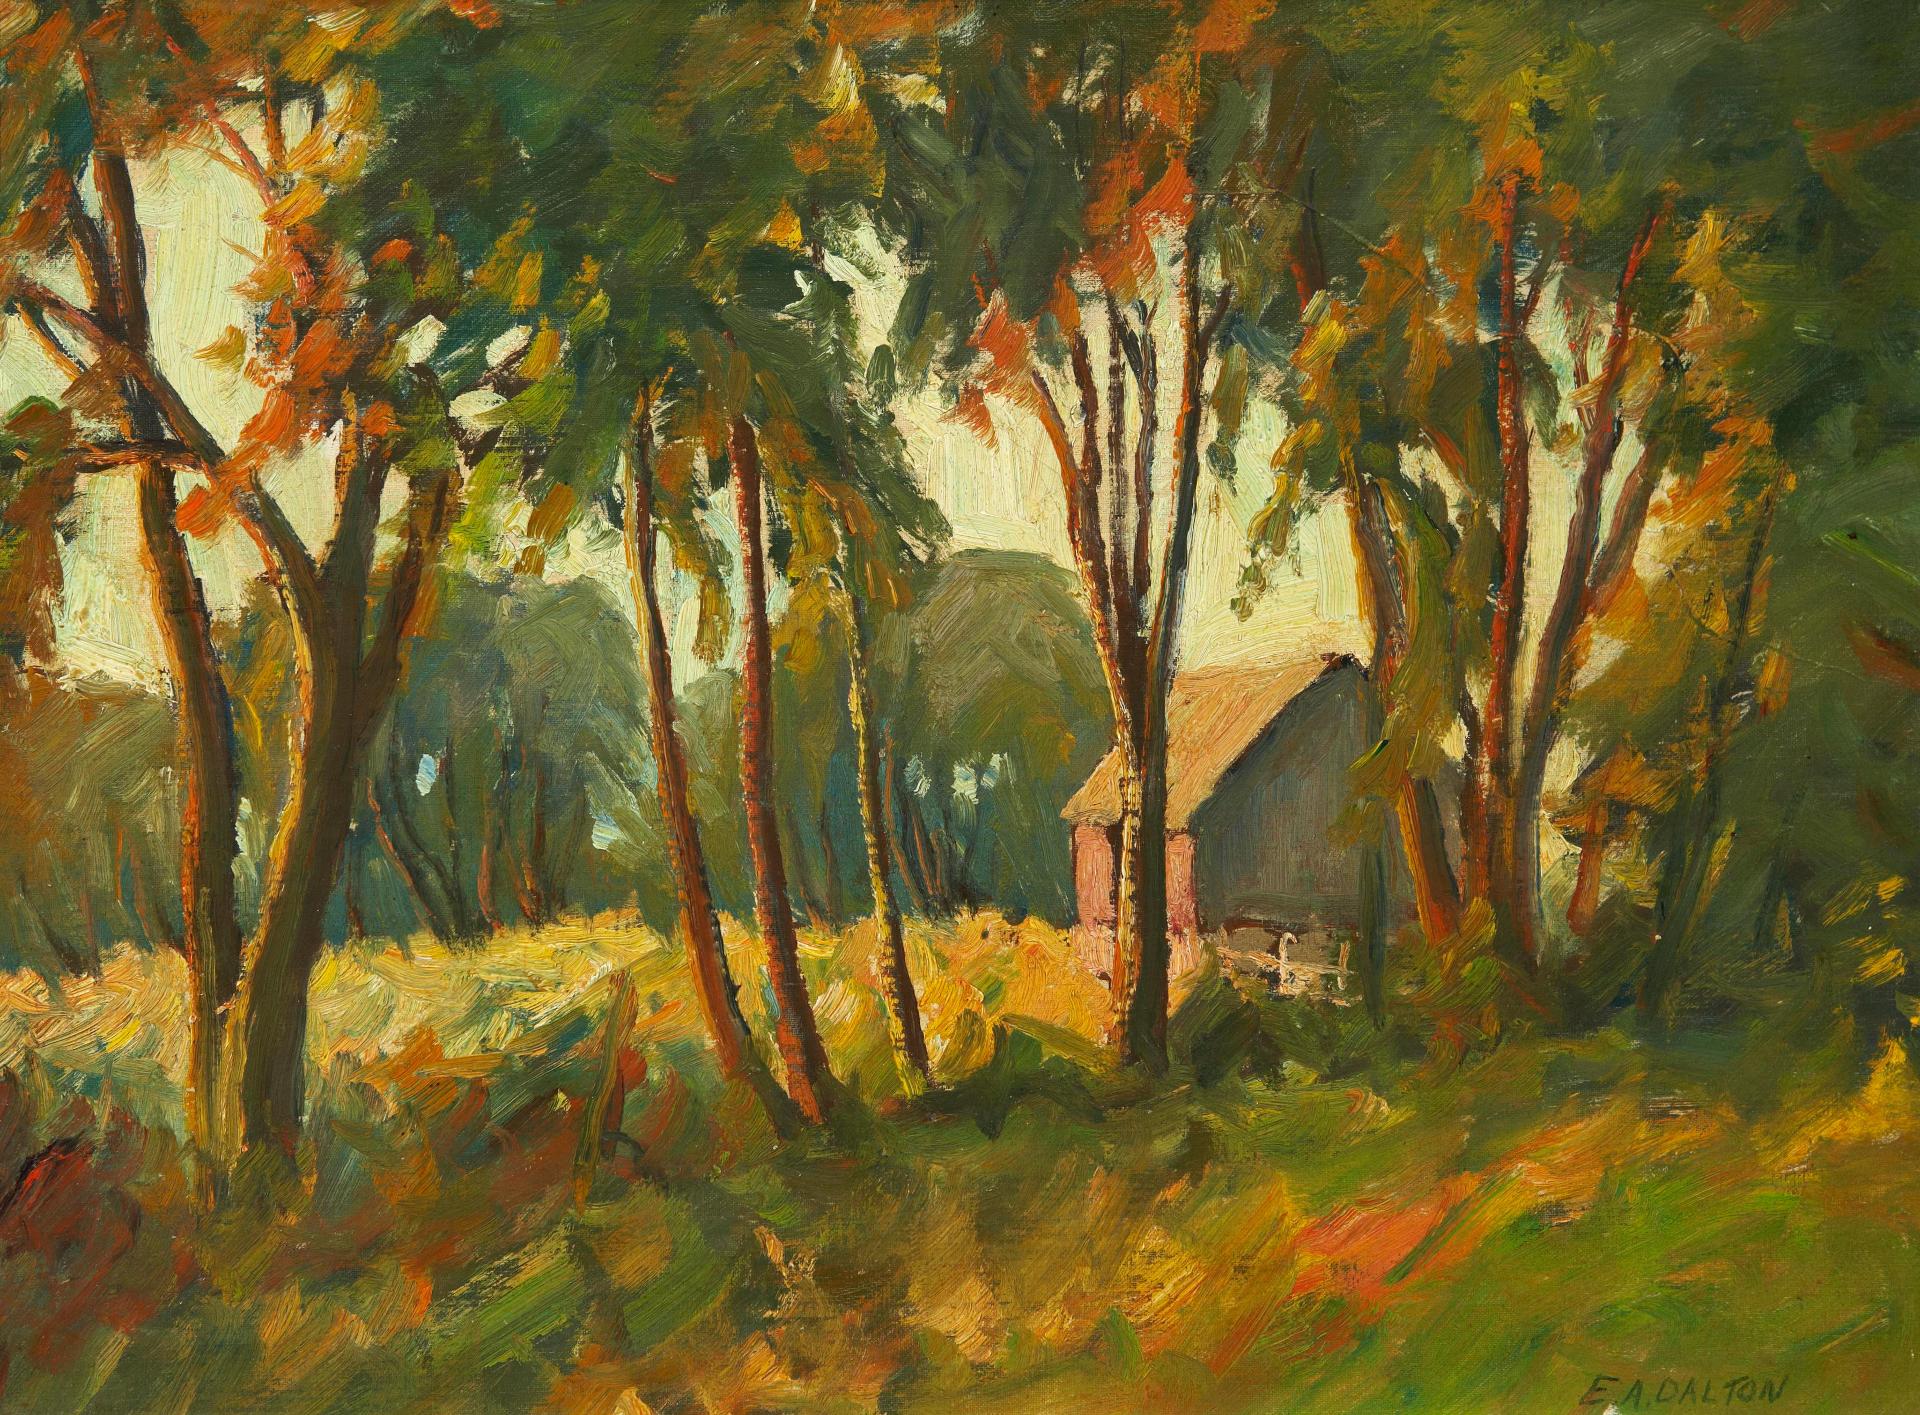 Ernest Alfred Dalton (1887-1963) - A view through the trees